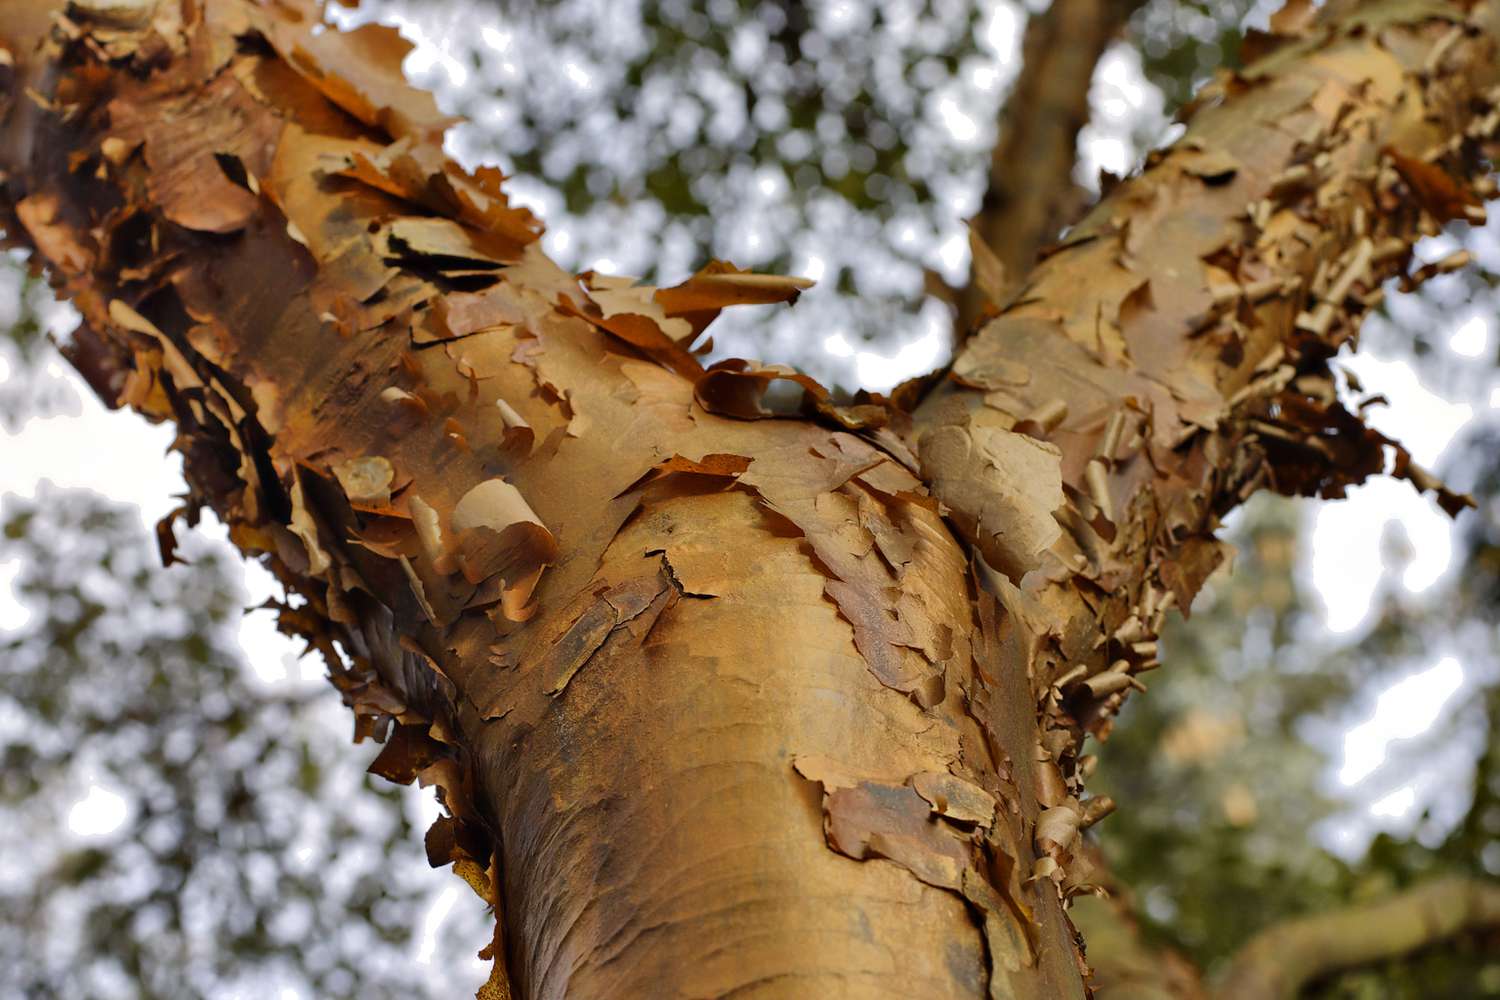 Paperbark maple with its peeling bark